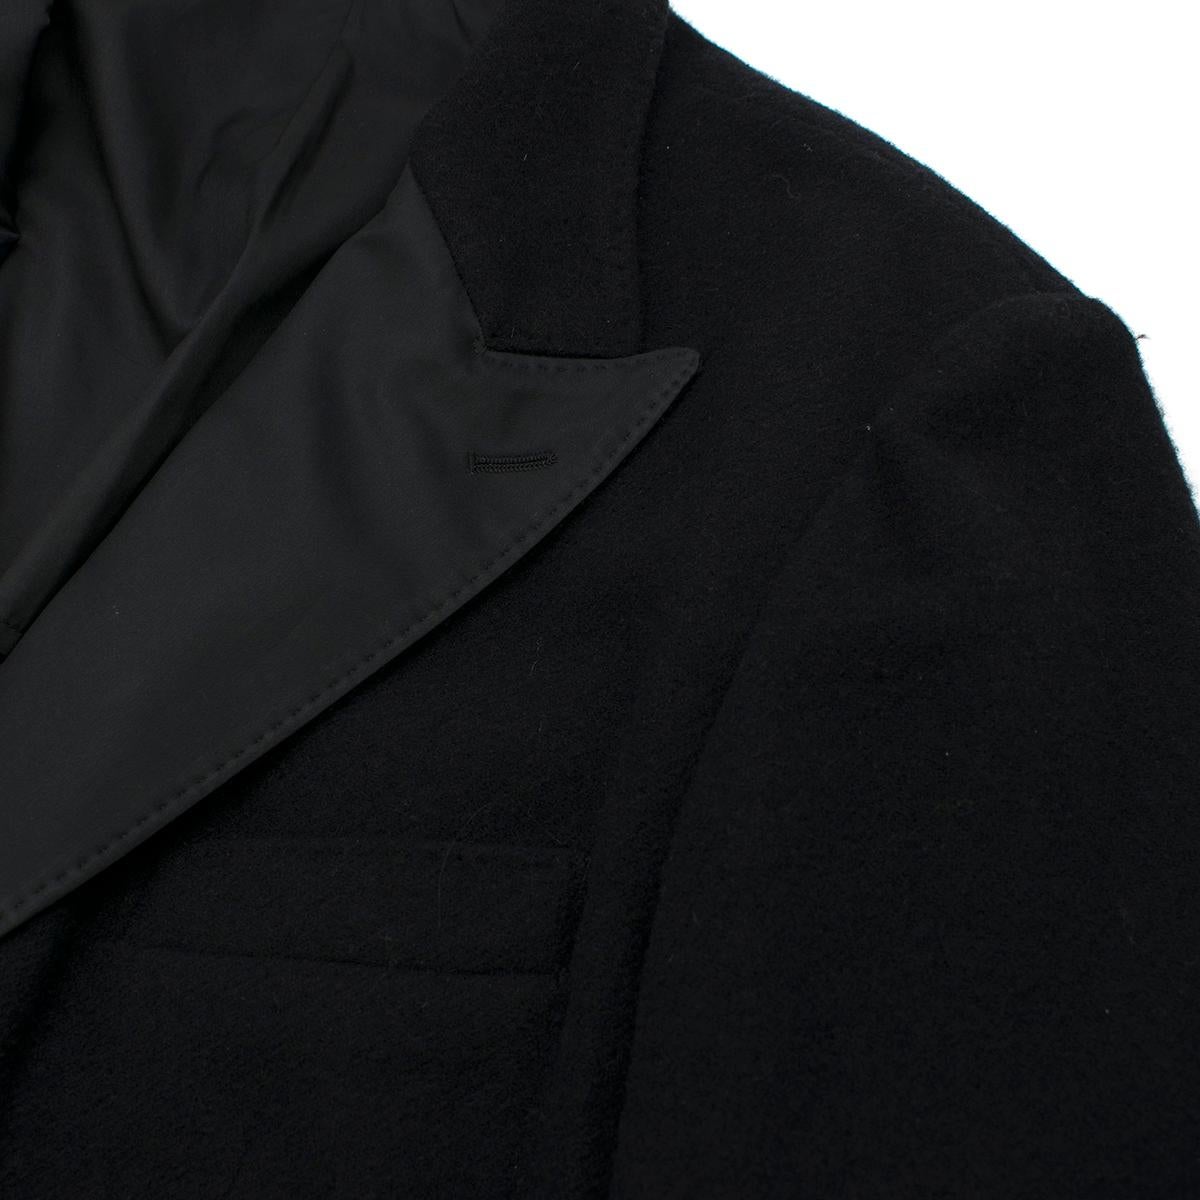 Dolce & Gabbana Men's Black Wool-blend Tailored Jacket estimated SIZE S 3